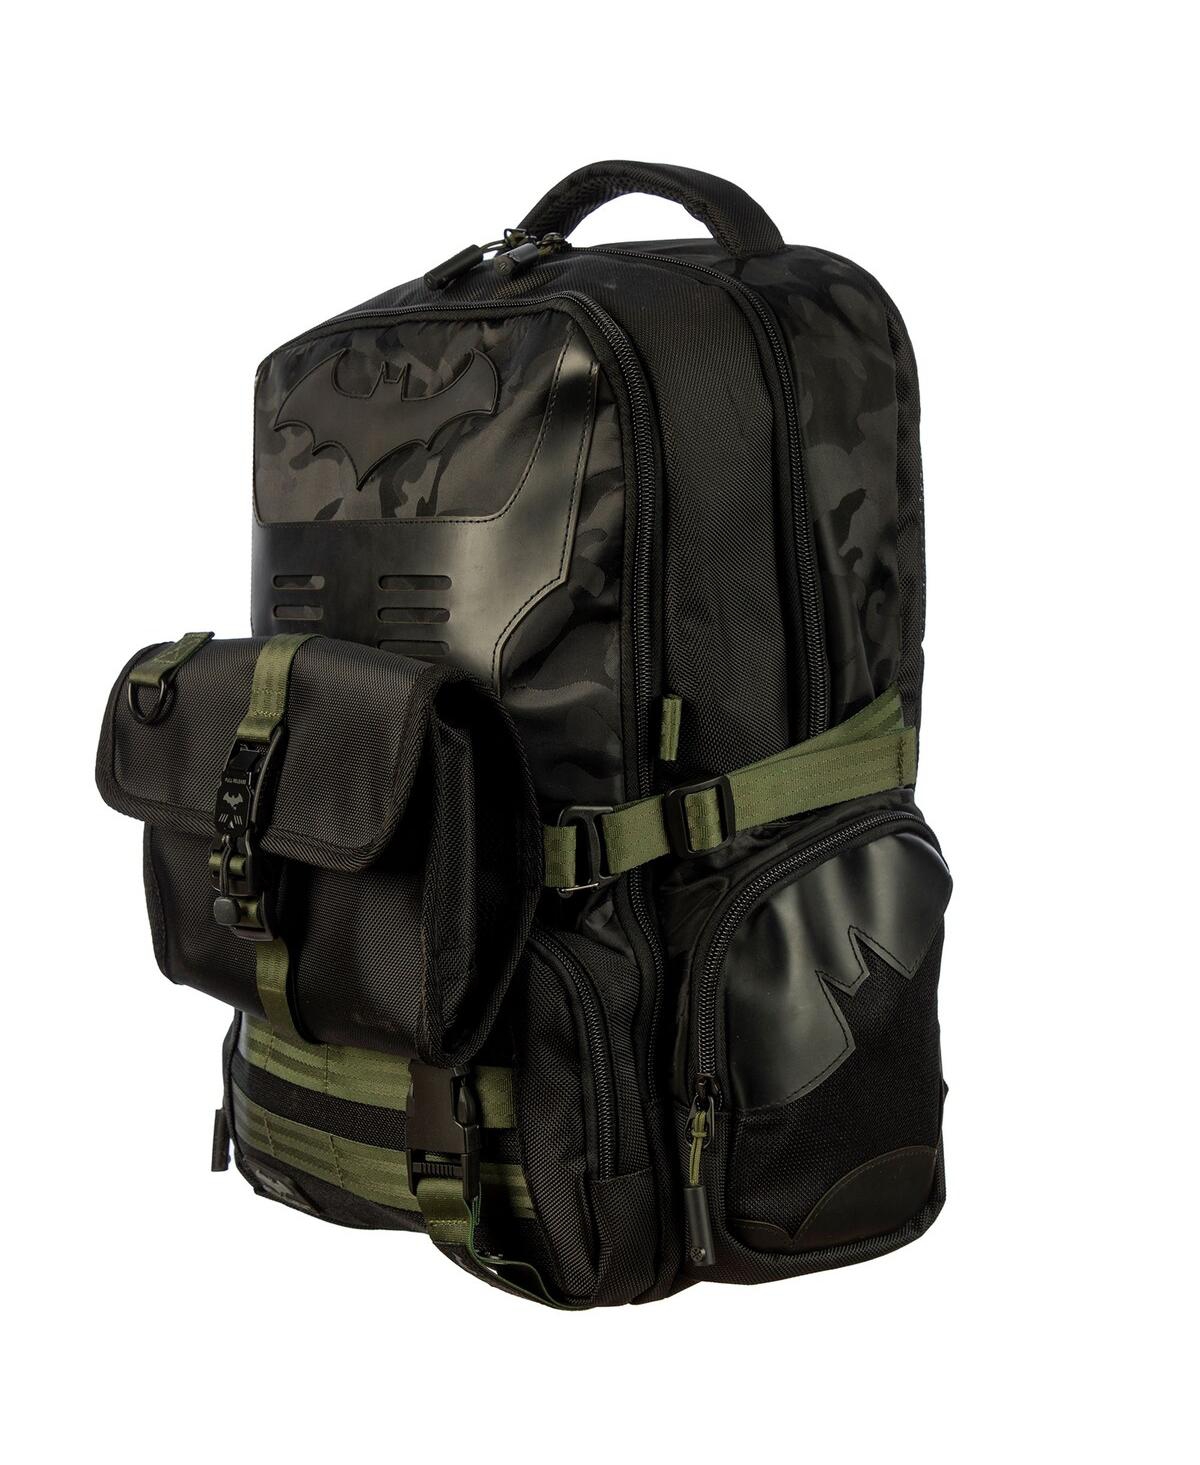 Men's and Women's Batman Tactical Backpack - Black